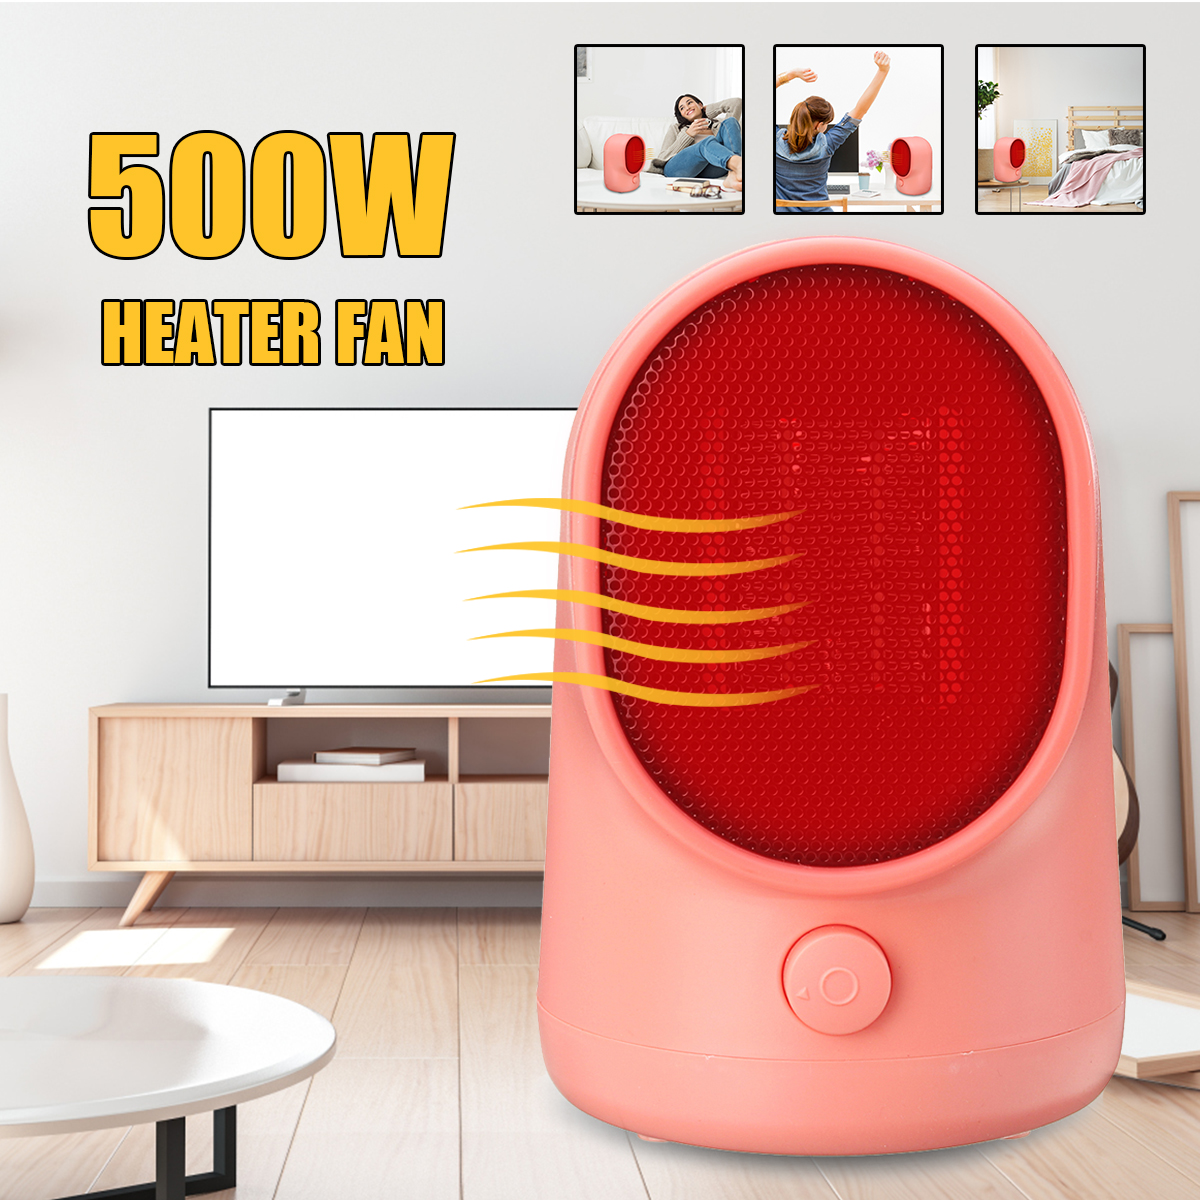 500W-Portable-Electric-Space-Heater-Desktop-Heating-Fan-Handy-Air-Warmer-Home-Office-1382446-1